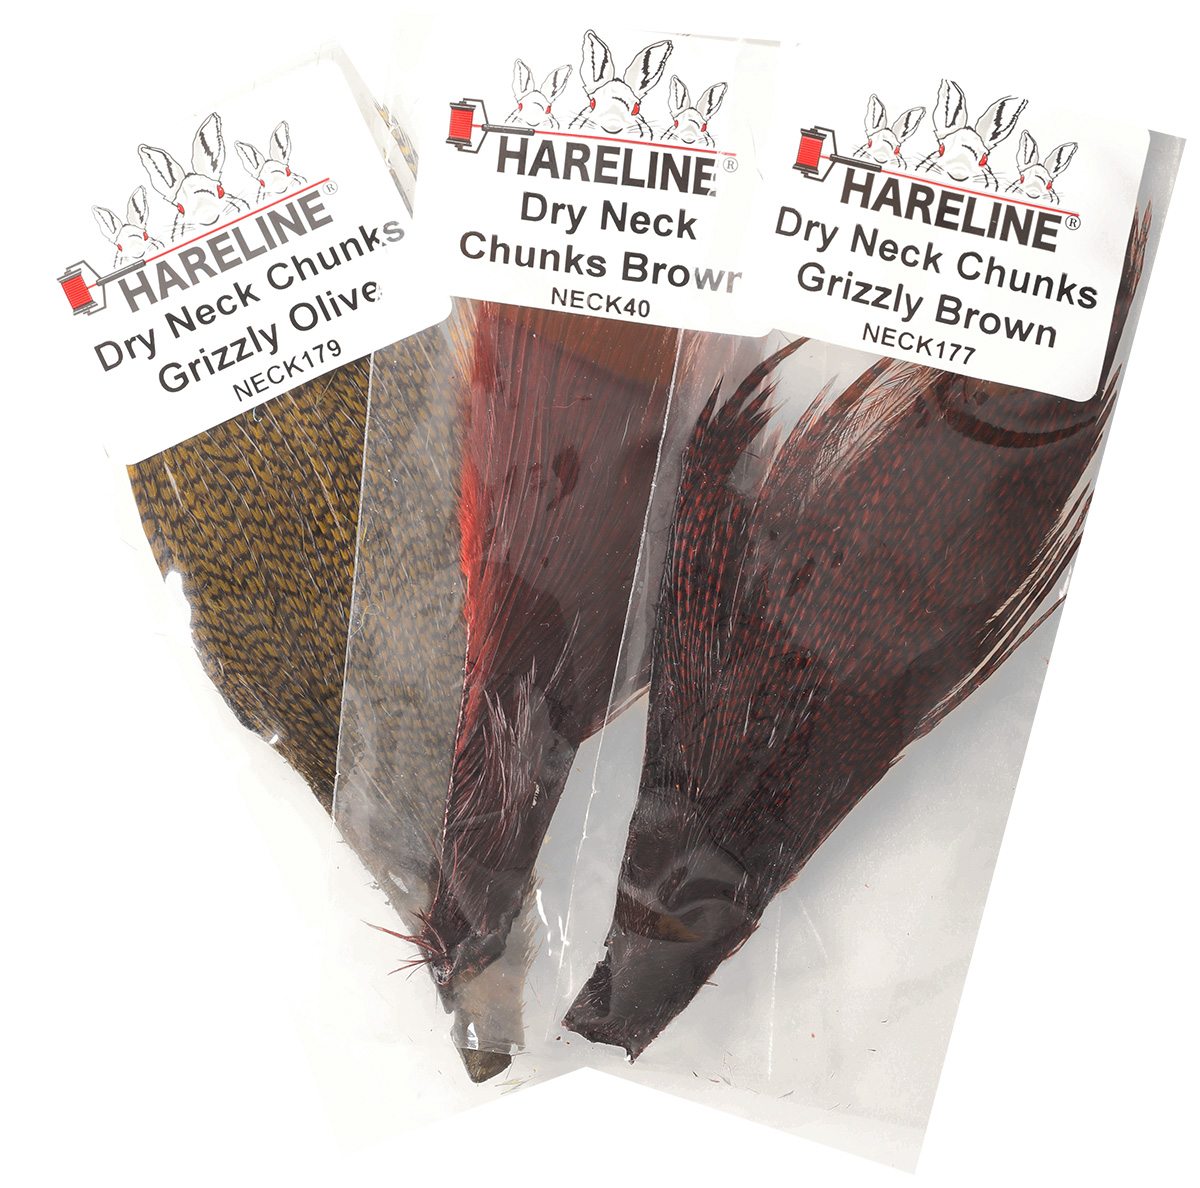 Hareline Dry Neck Chunks